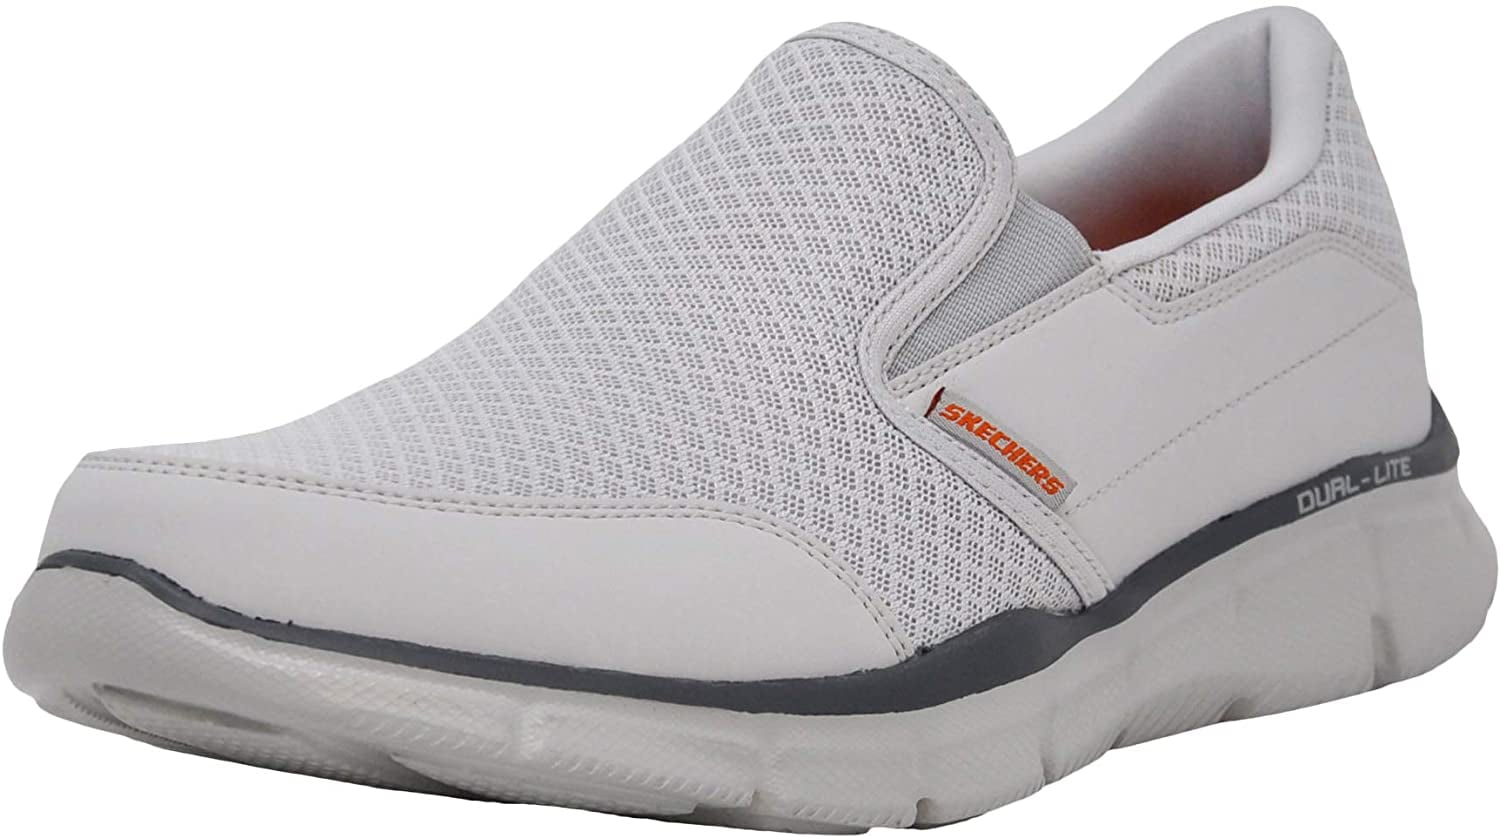 Skechers Men's Equalizer Persistent Slip-On Sneaker, Light Grey, 9.5 US -